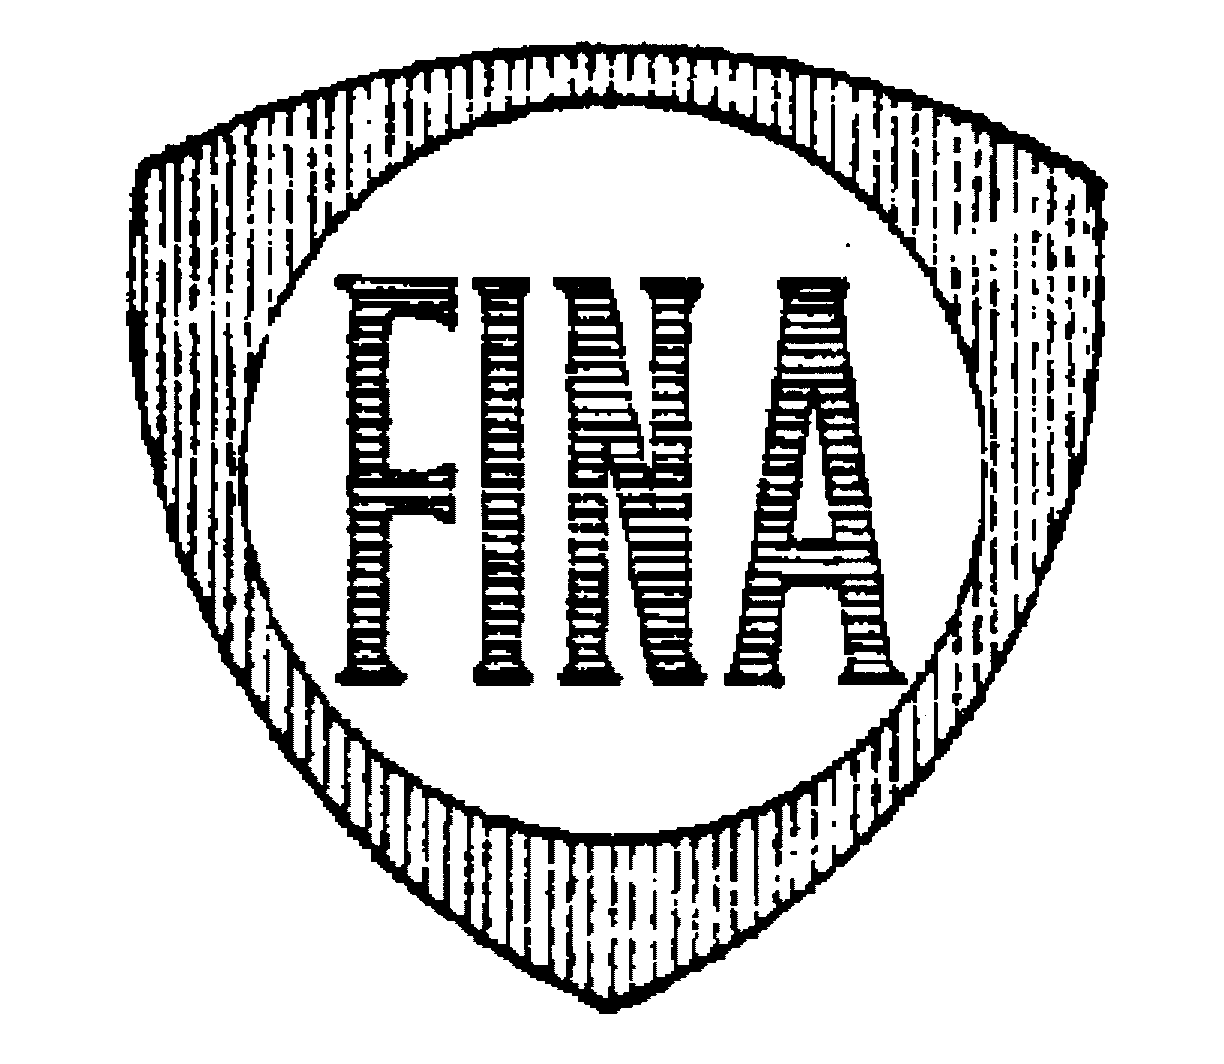 Trademark Logo FINA